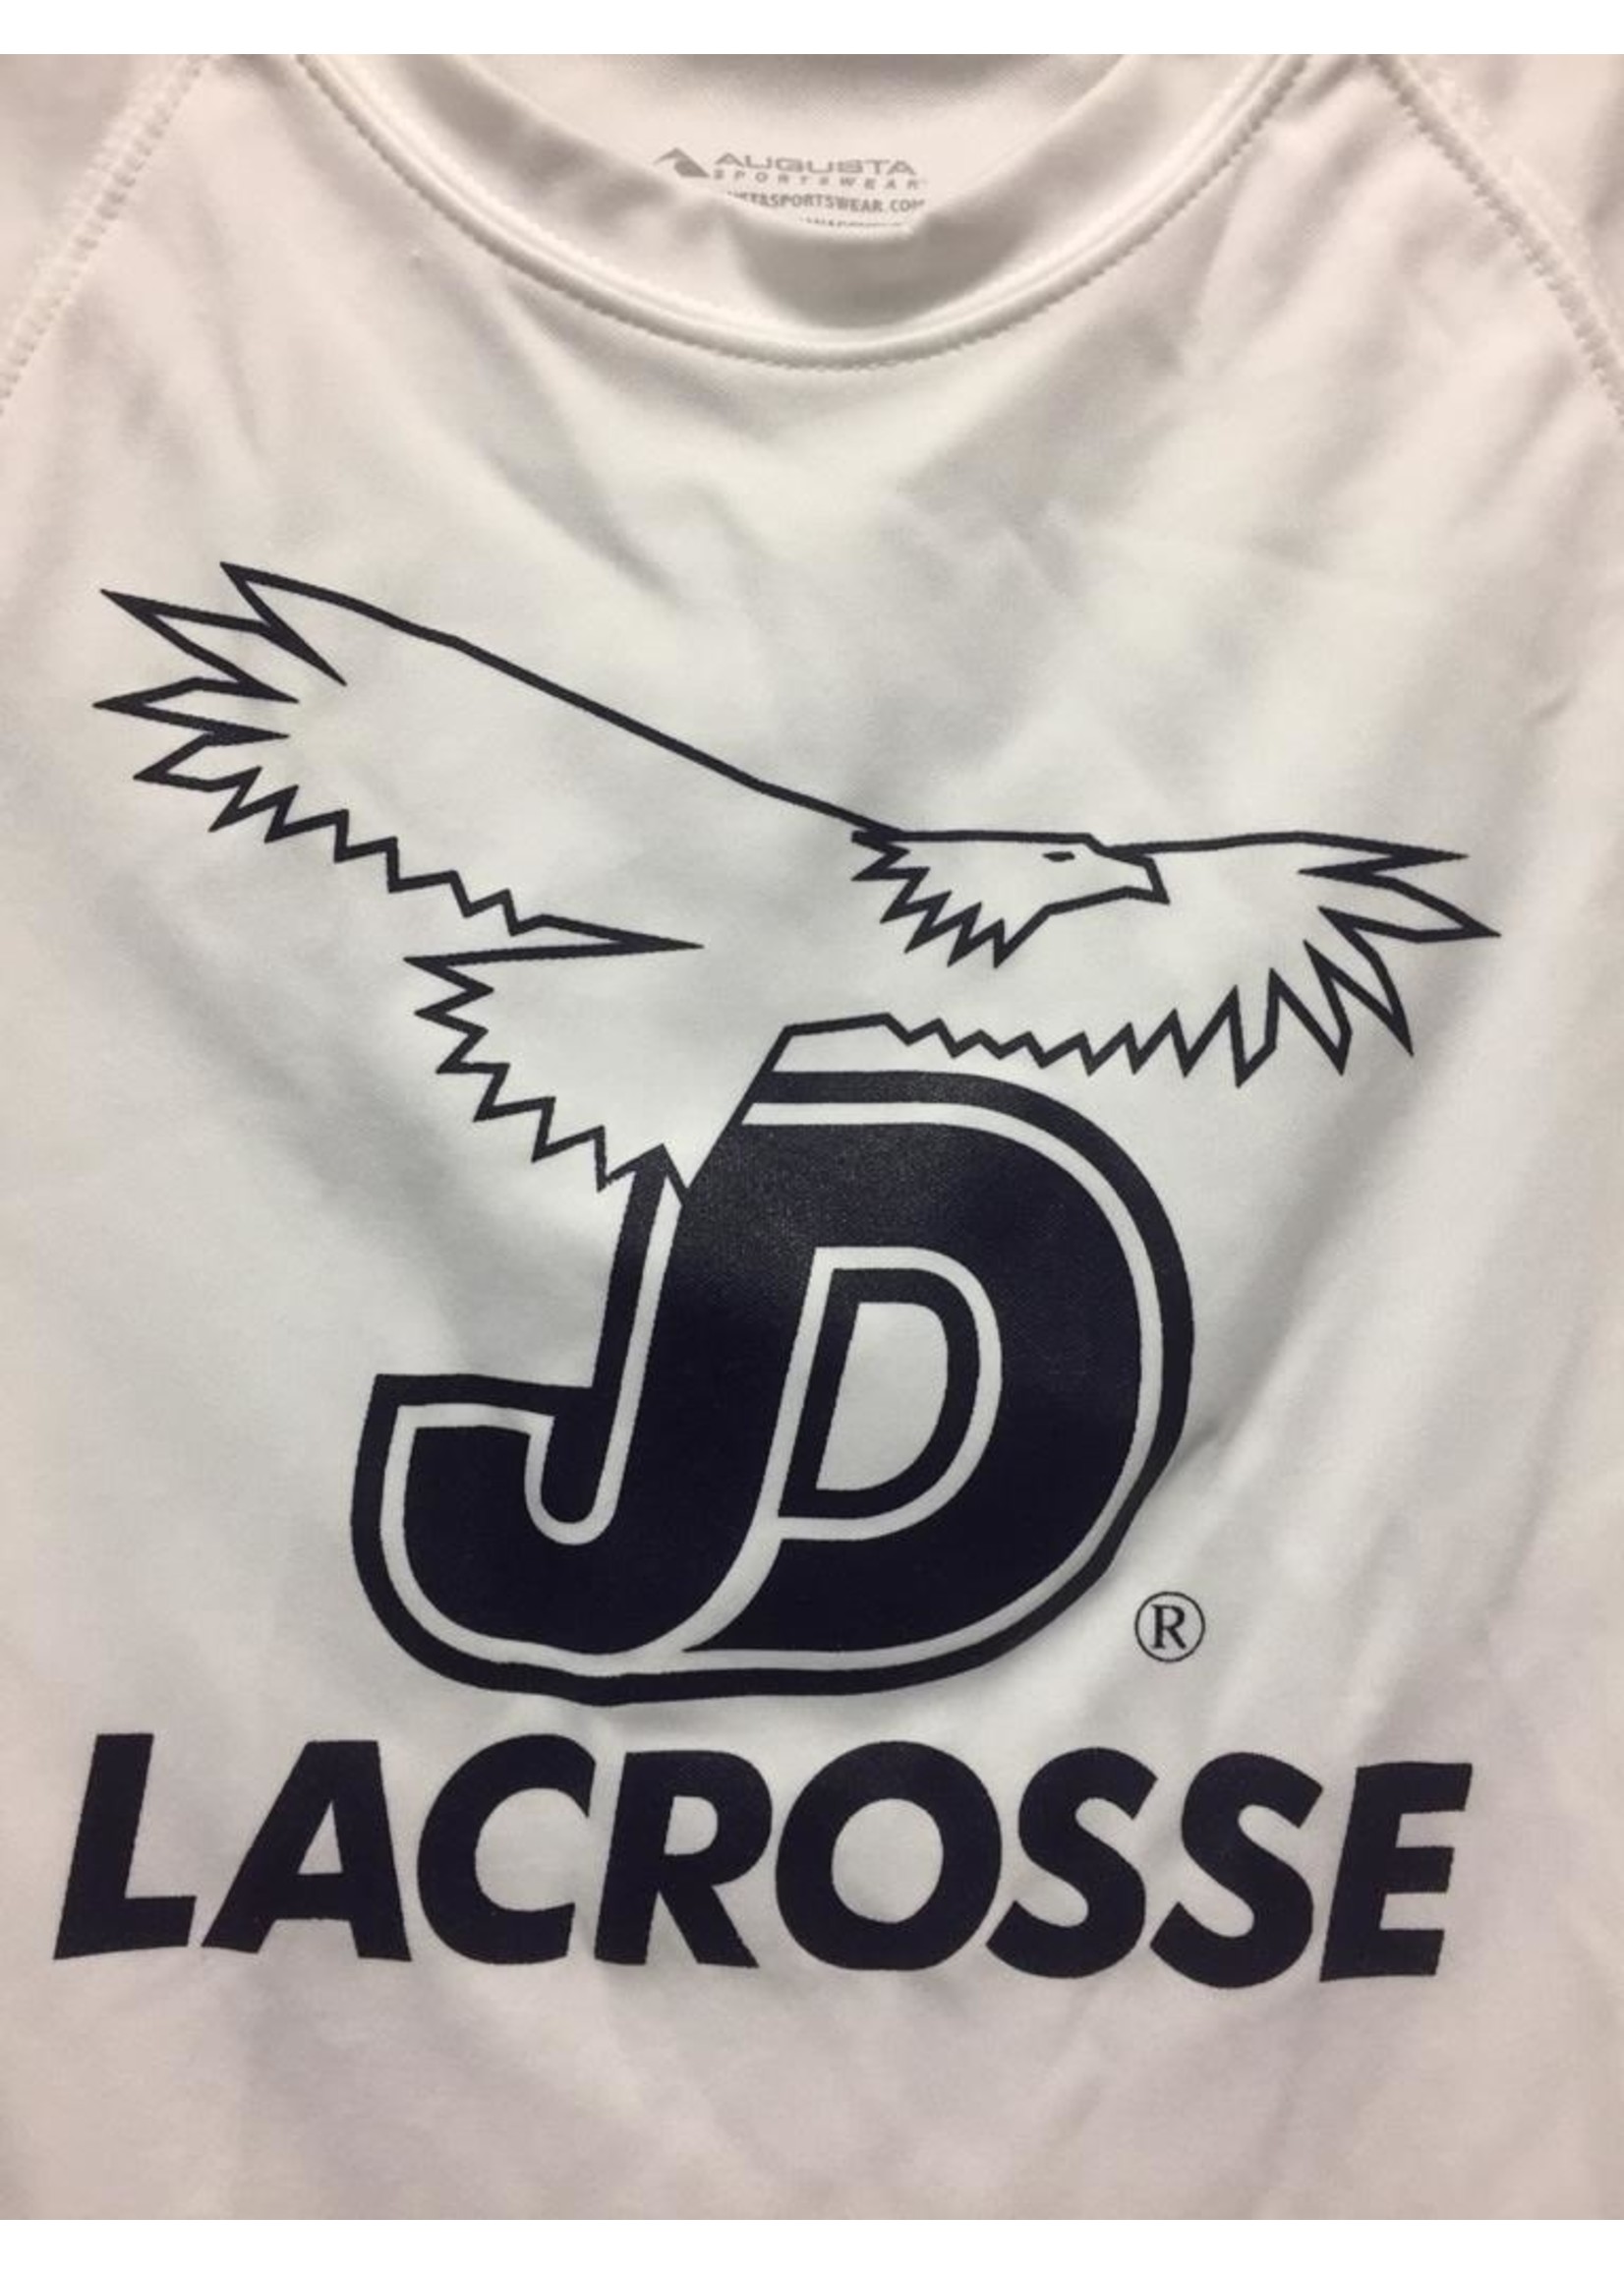 UNIFORM JD Youth Lacrosse Uniform Shirt